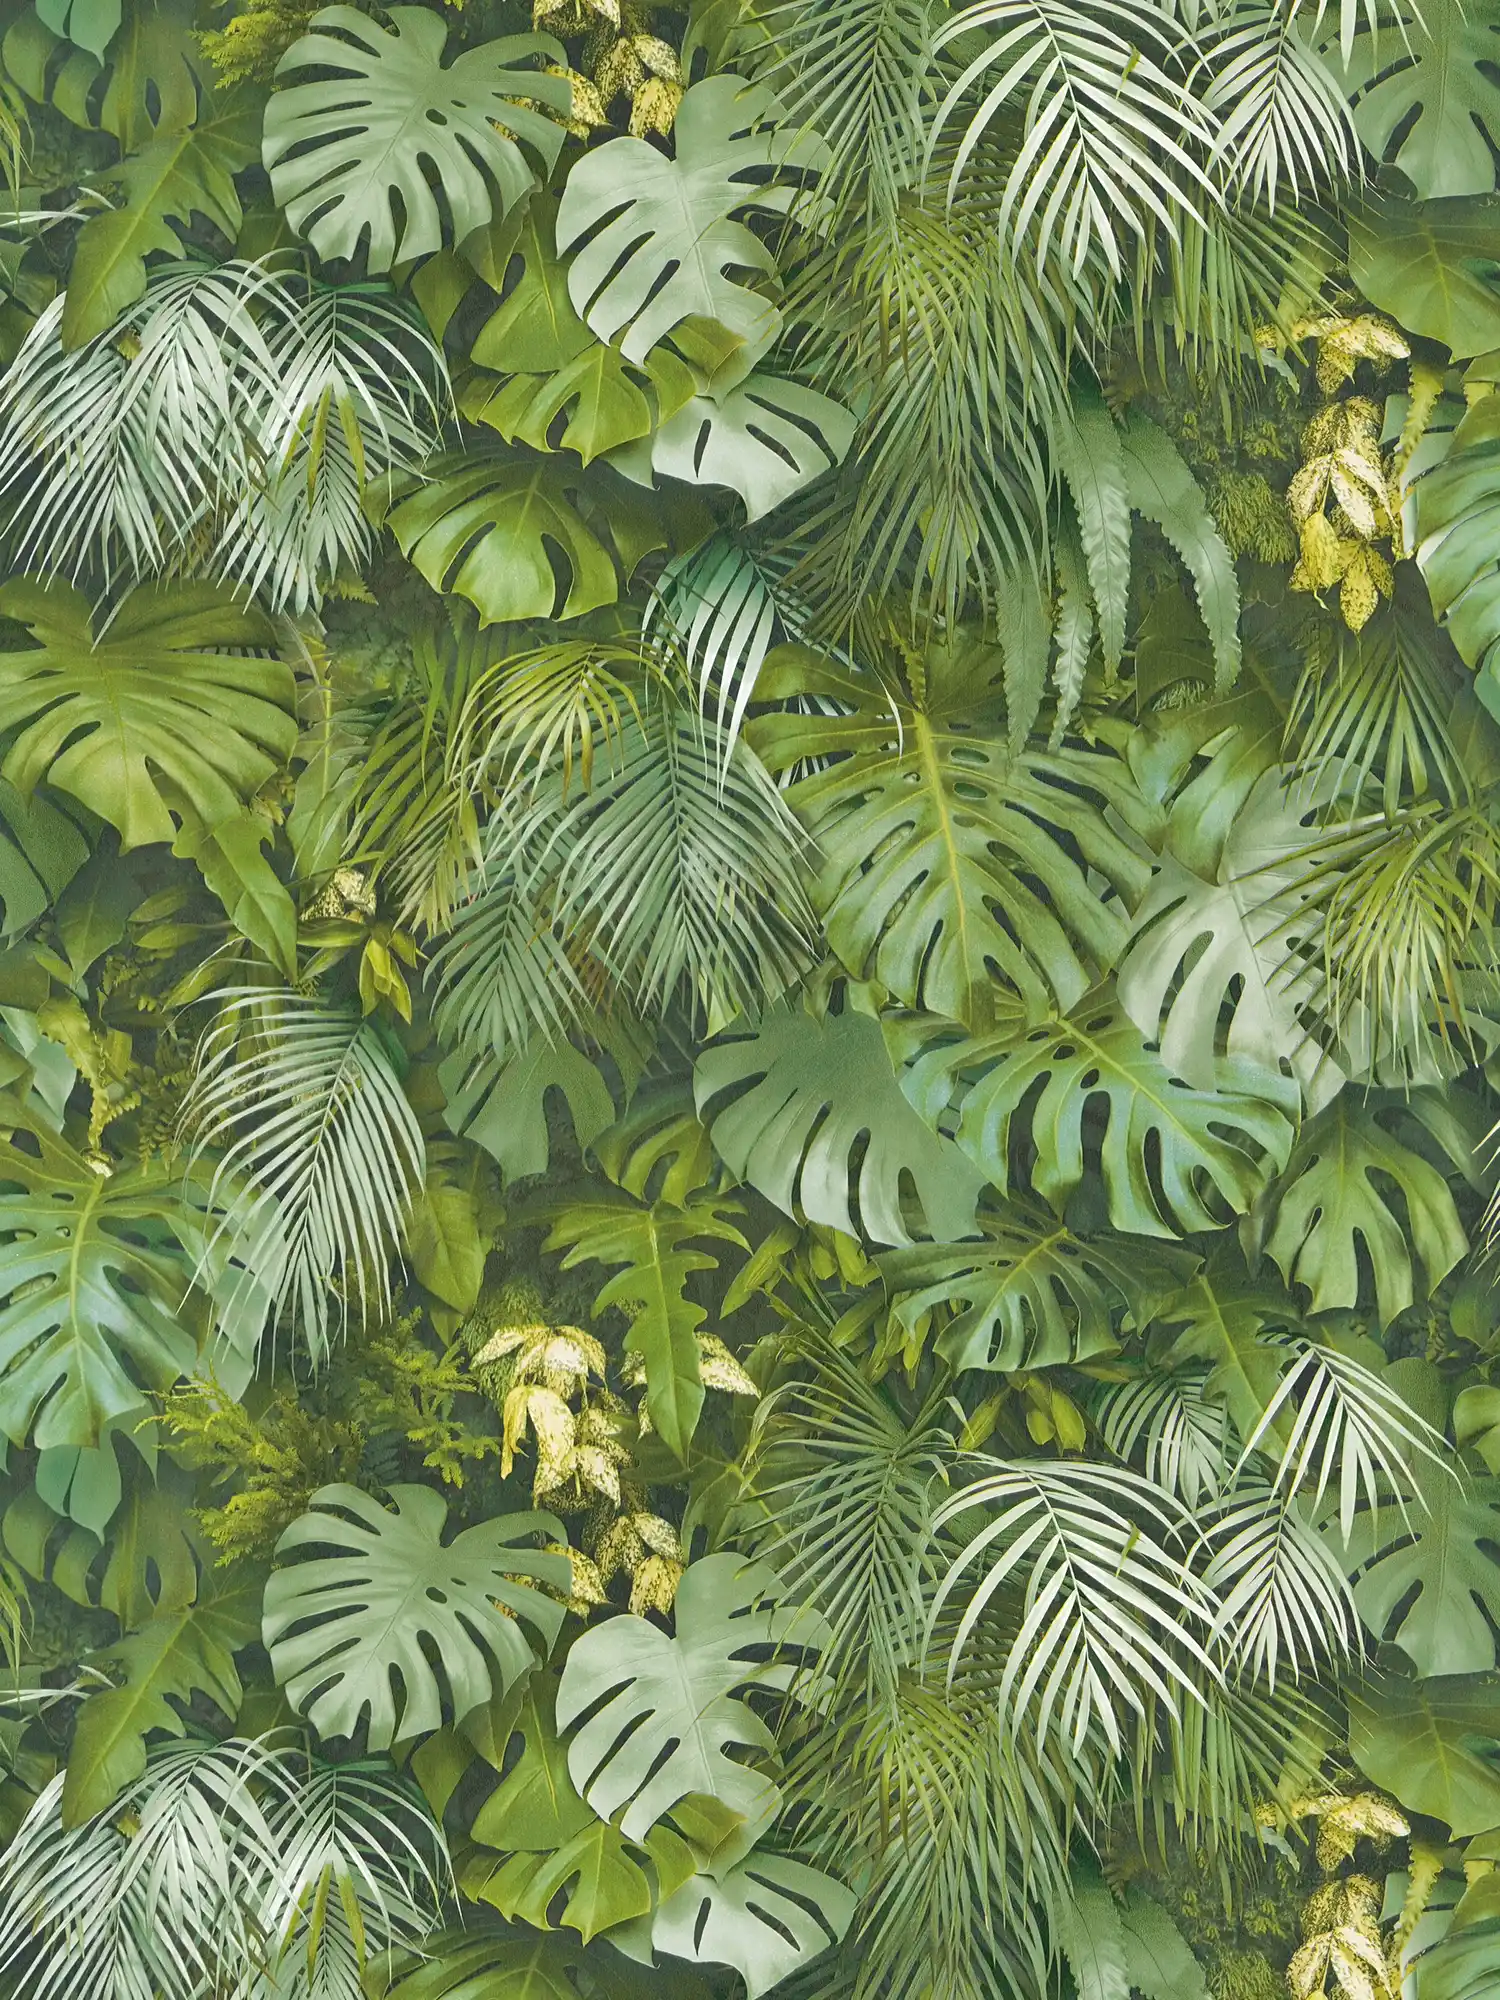 Self-adhesive wallpaper | jungle pattern in 3D look - green
